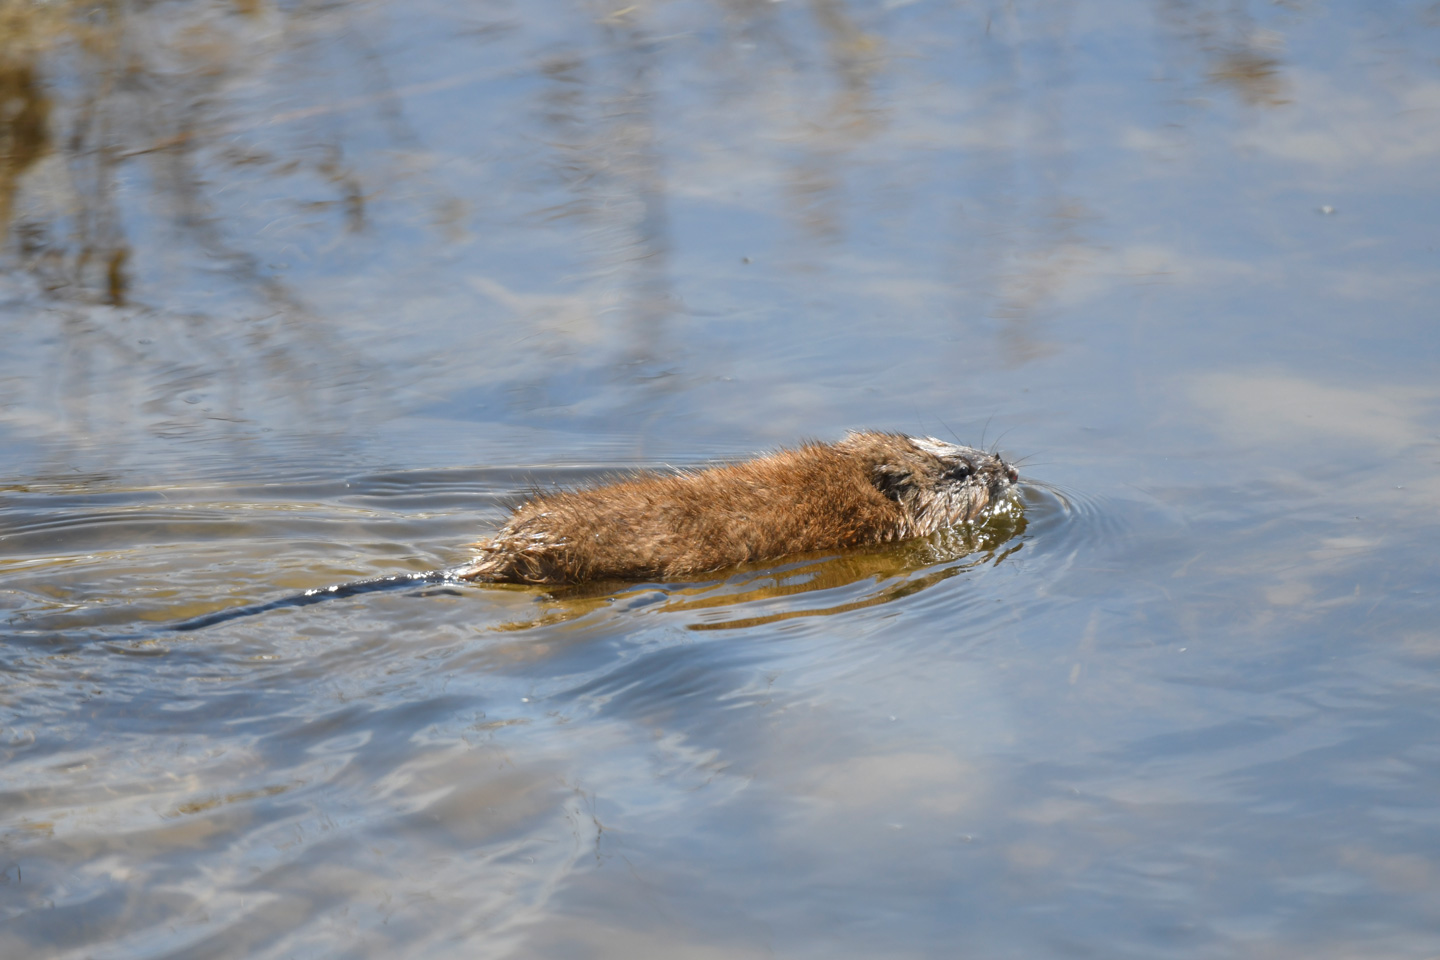 A muskrat swimming through water.